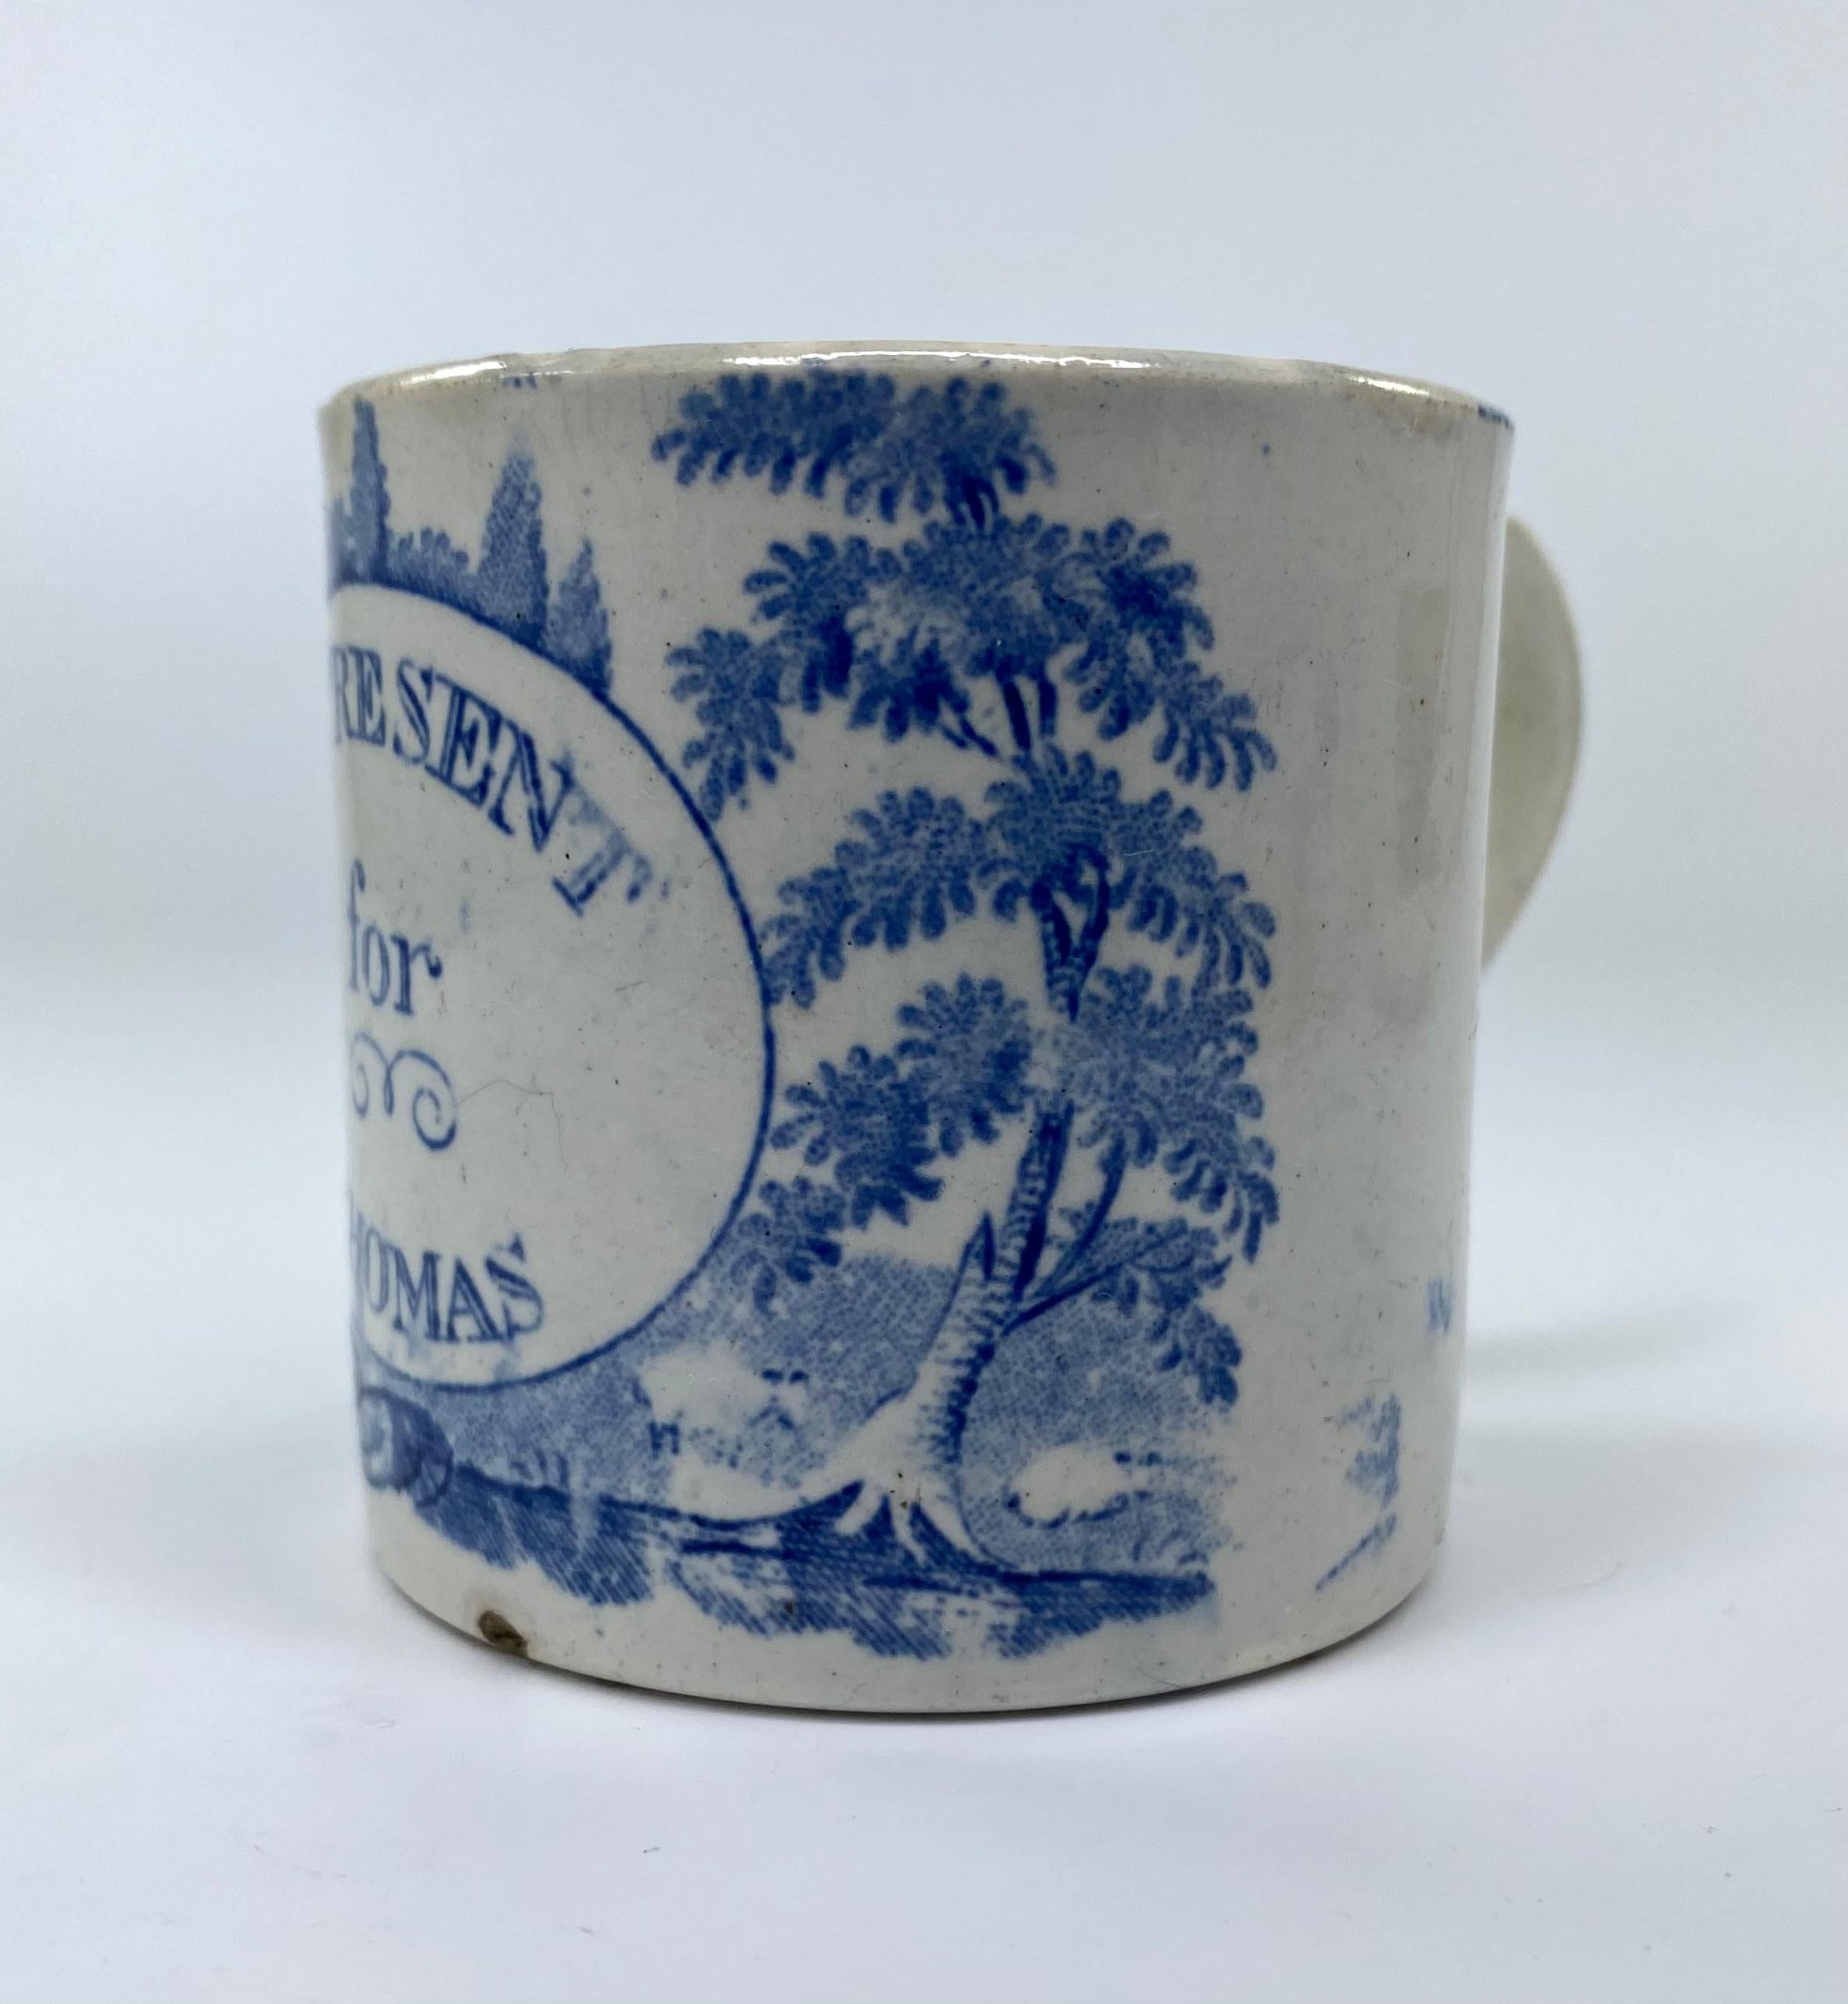 Fired Staffordshire Child’s Mug ‘Present for Thomas’, c. 1830